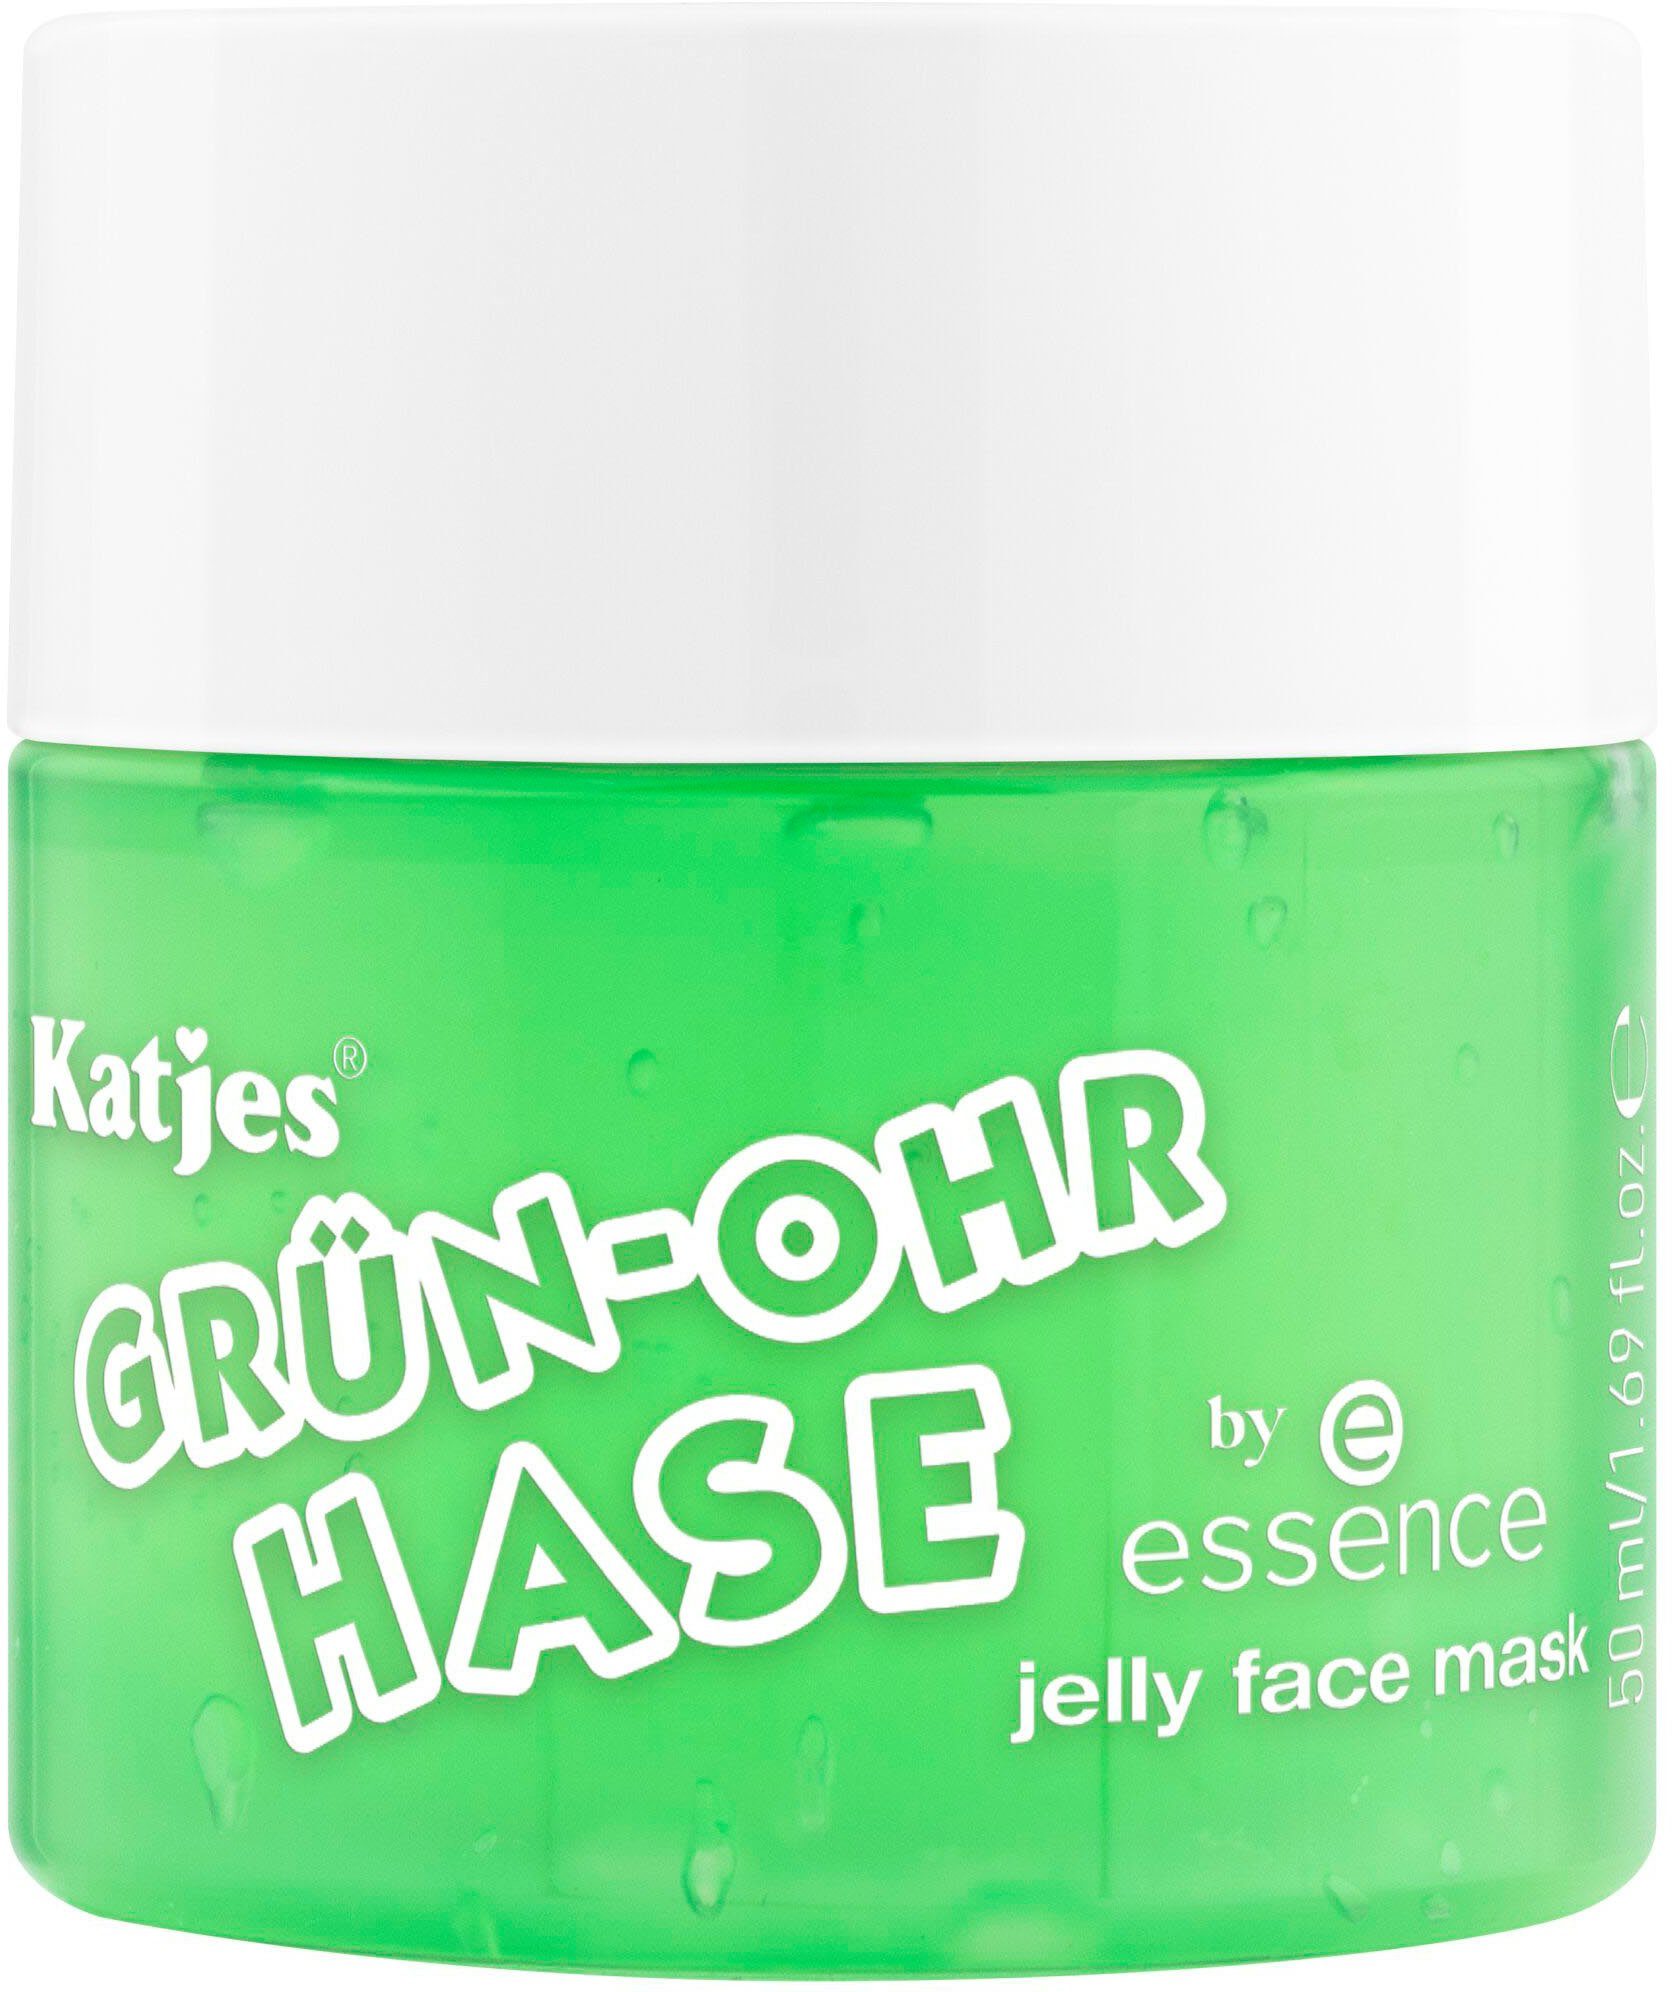 Essence Gesichtsmaske essence 3-tlg. face Set, mask jelly